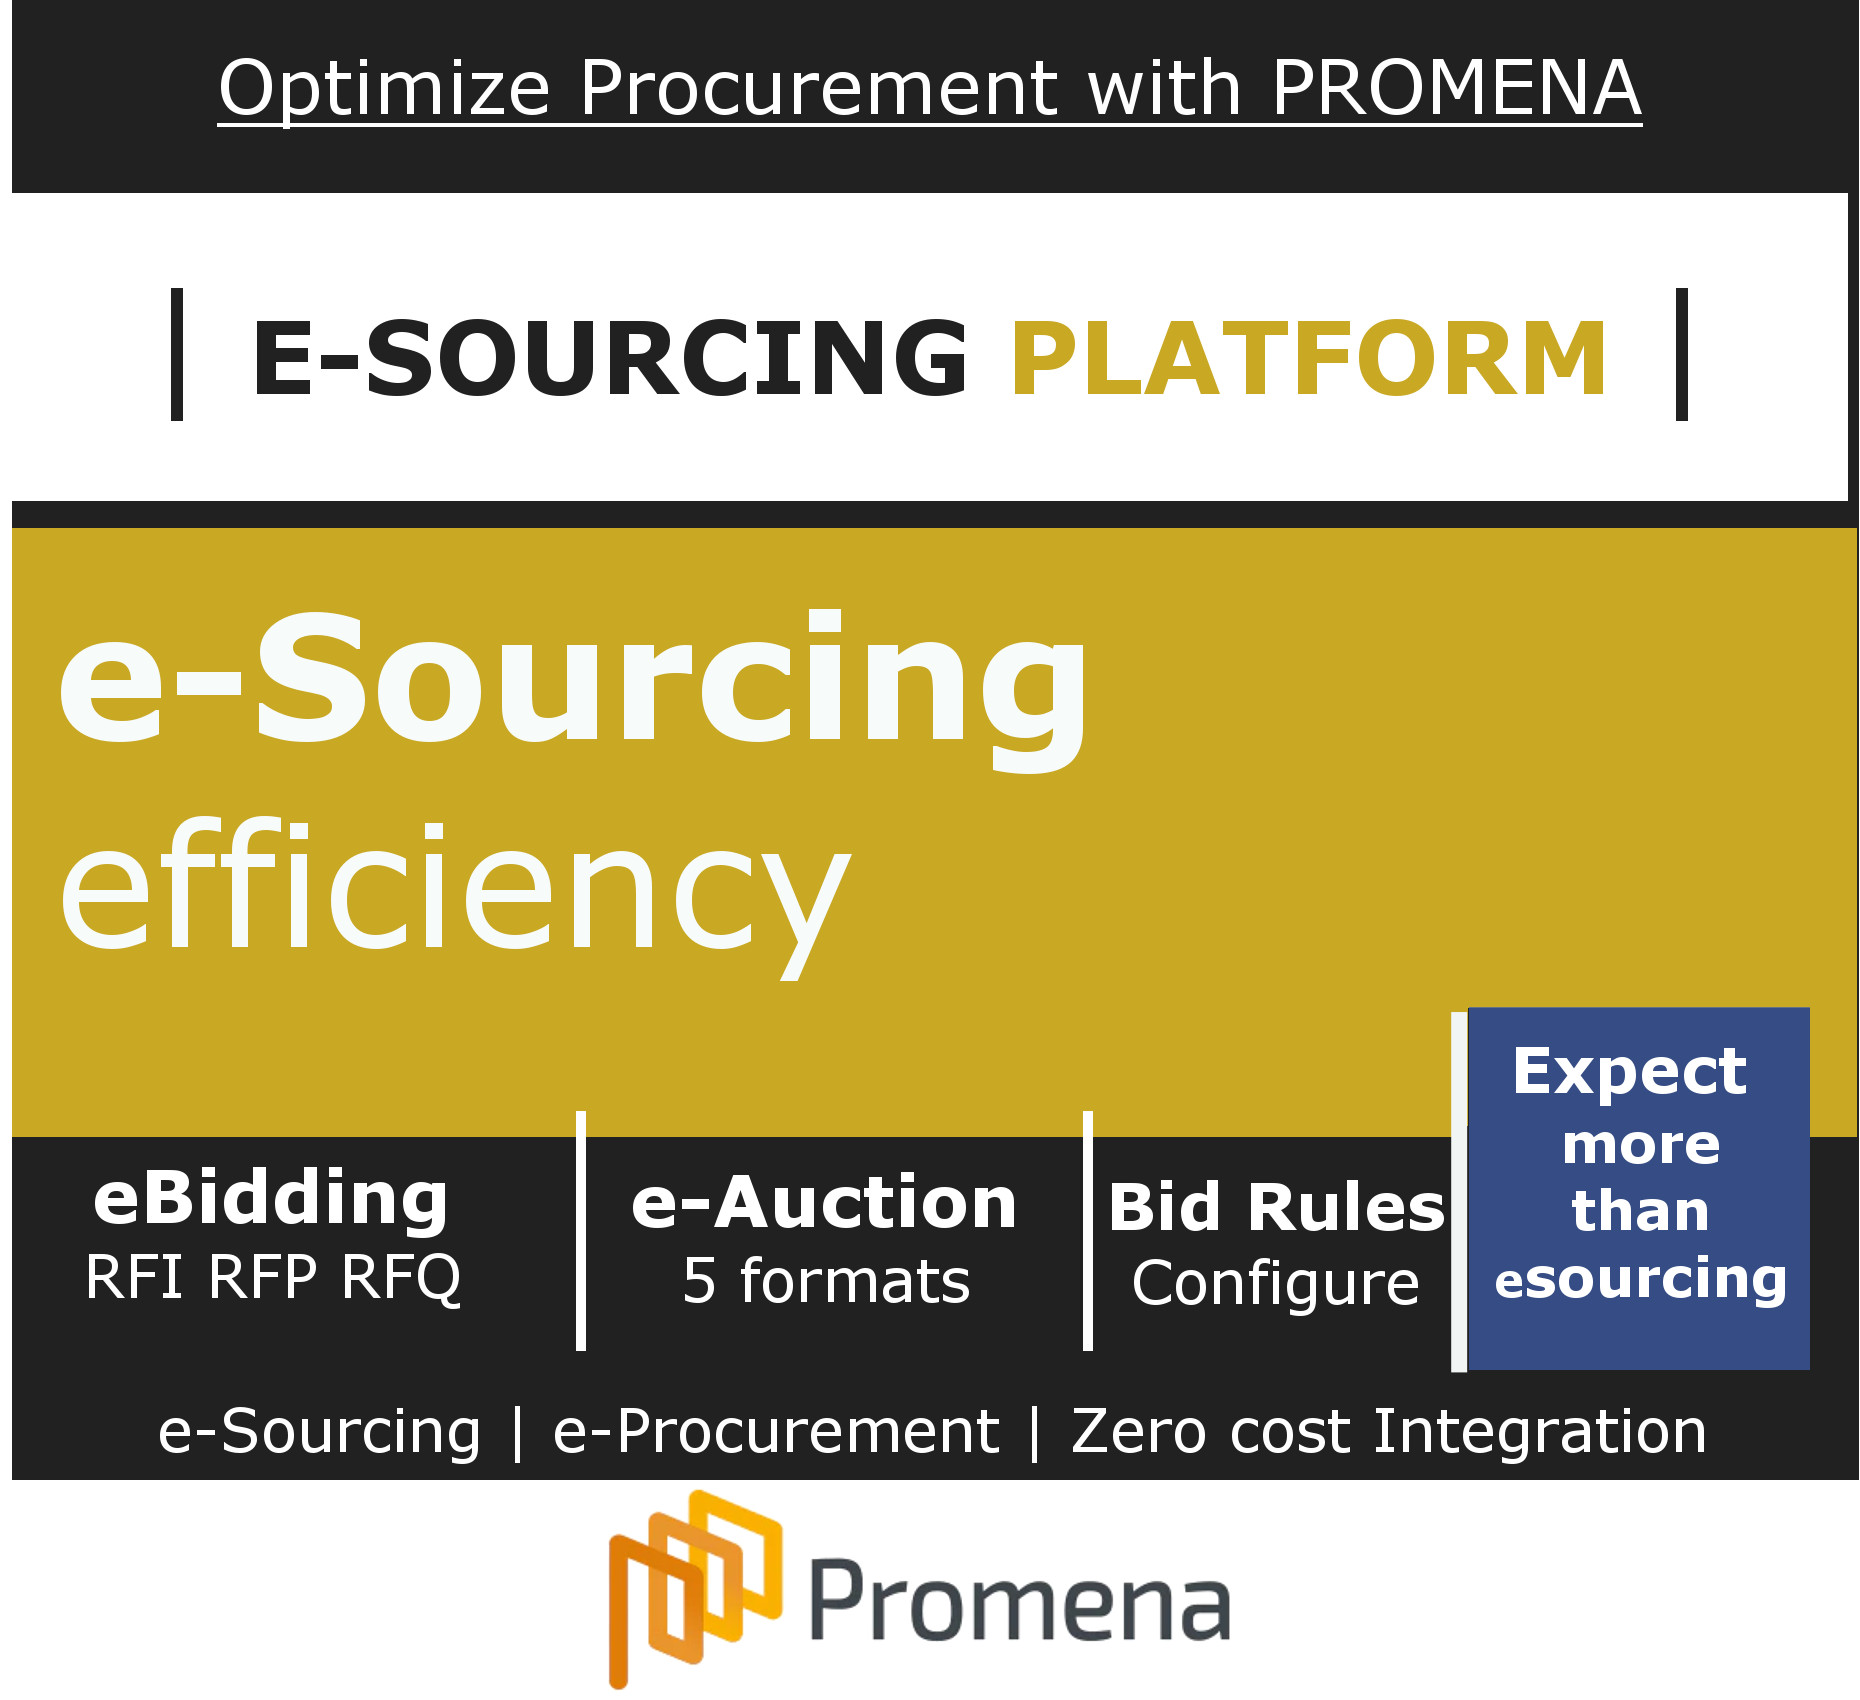 Promena e-Sourcing Platform and Procurement Services